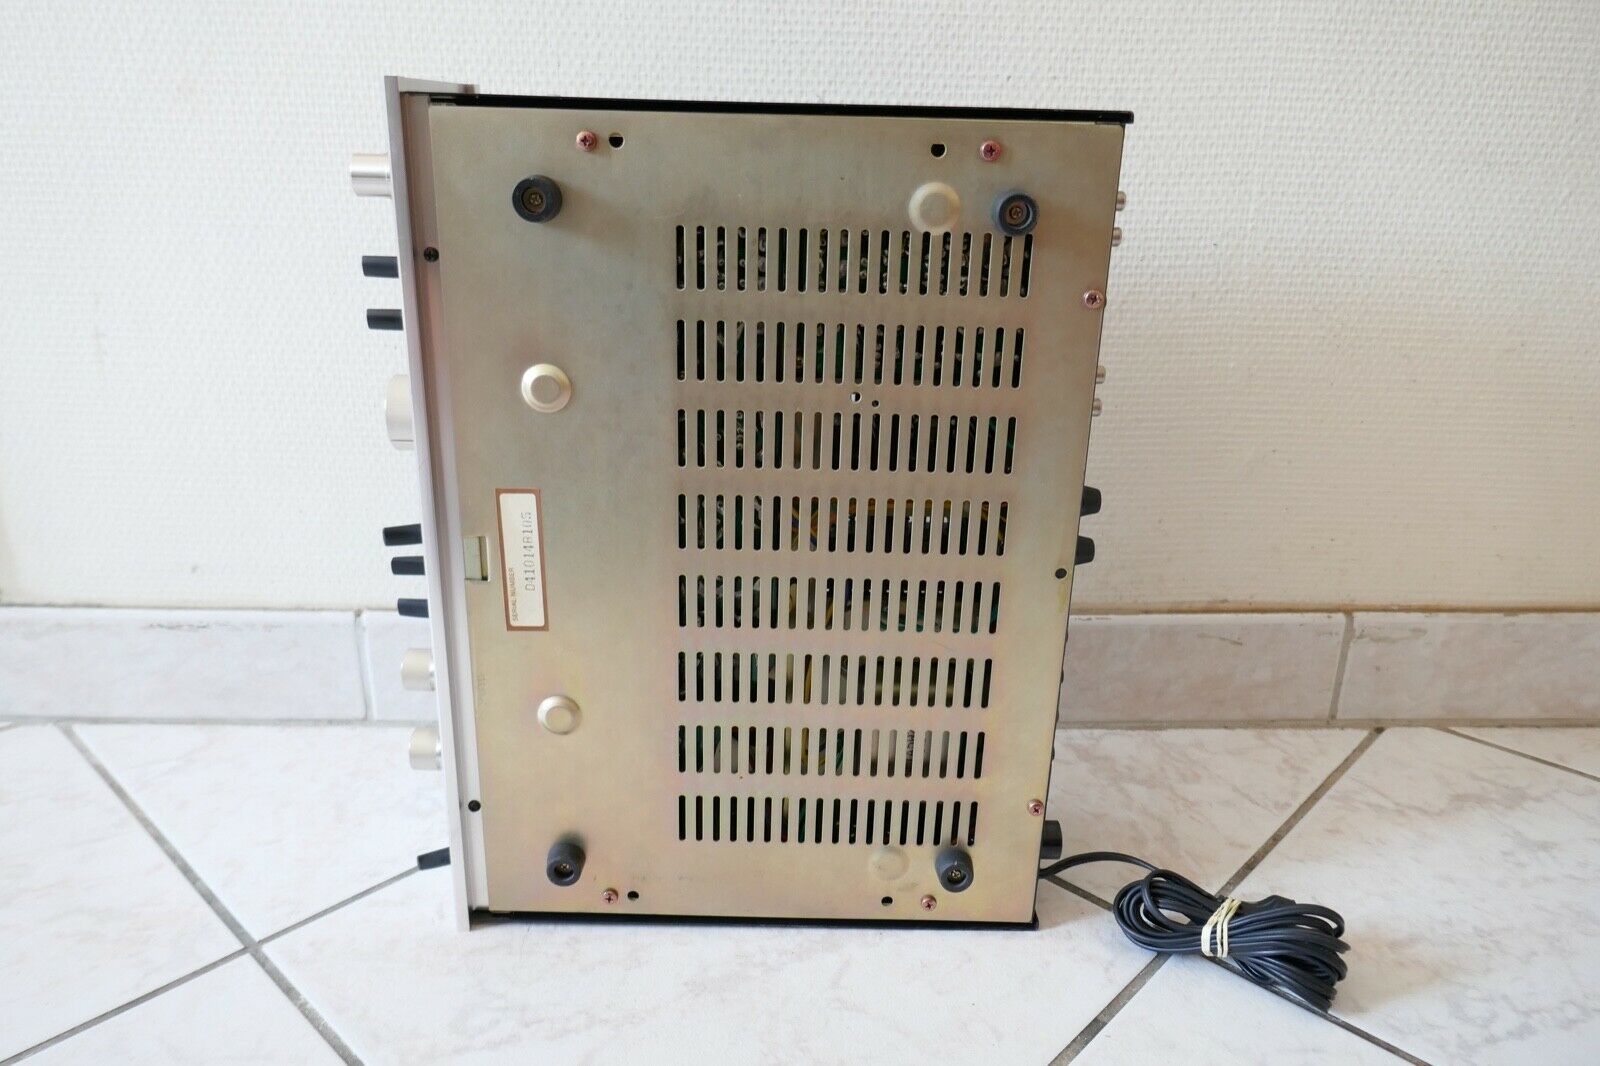 amplificateur amplifier technics su-3500 vintage occasion